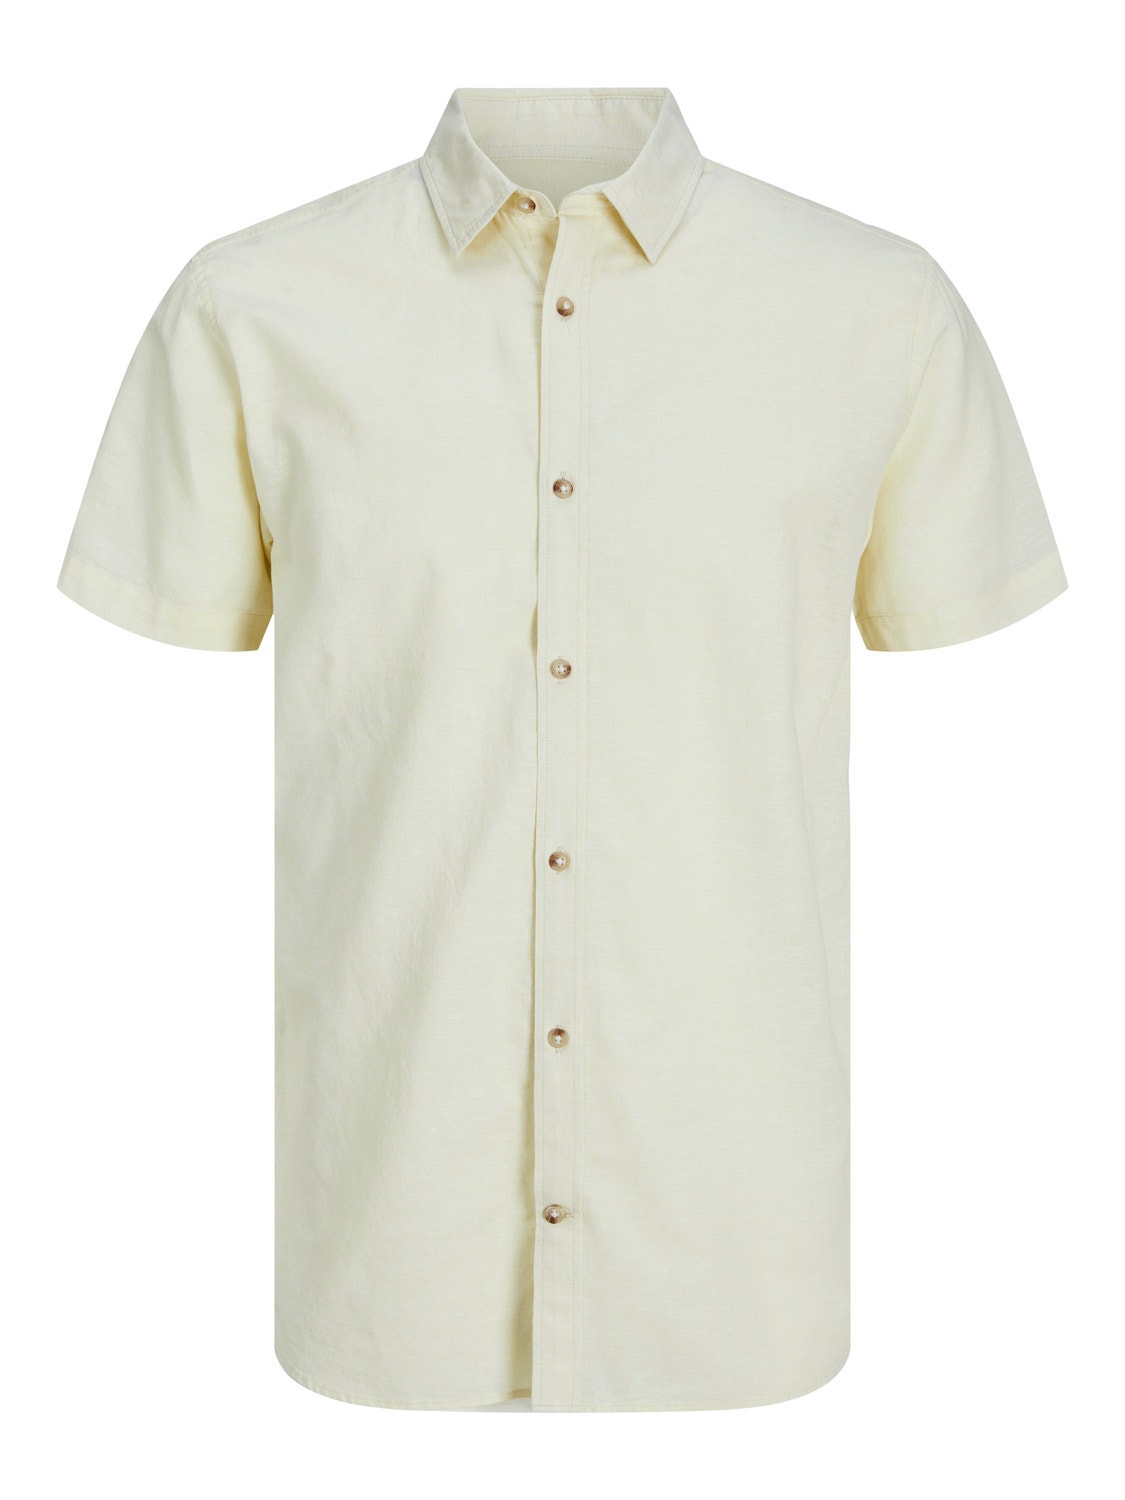 Jack & Jones Comfort Fit Shirt -French Vanilla - 12248383